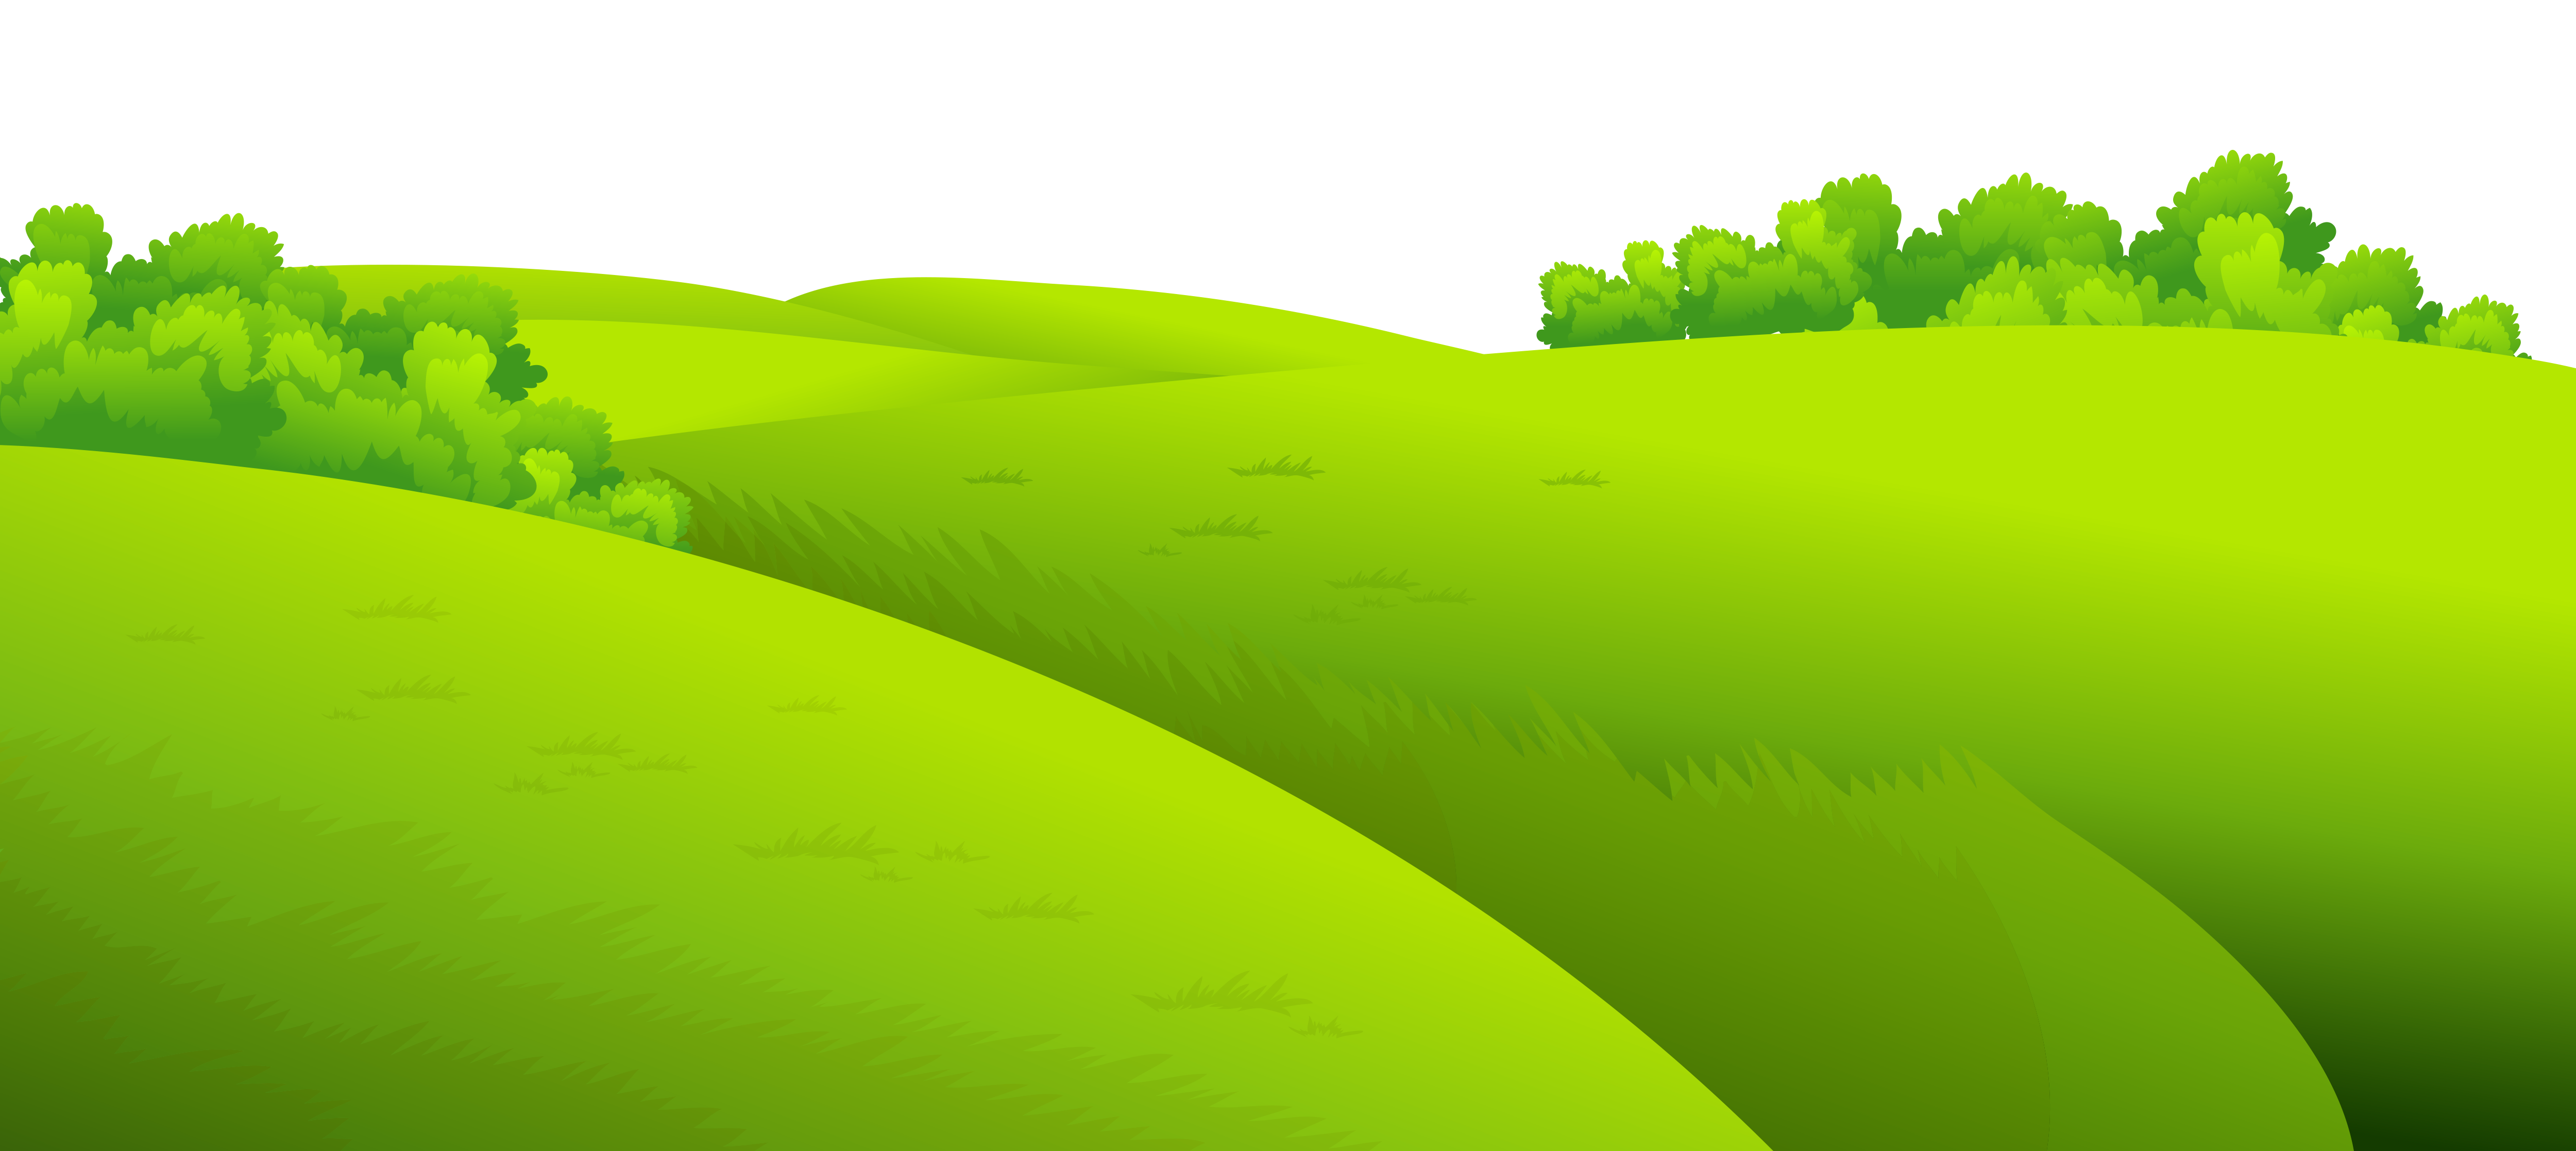 Green Meadows Background Clip Art